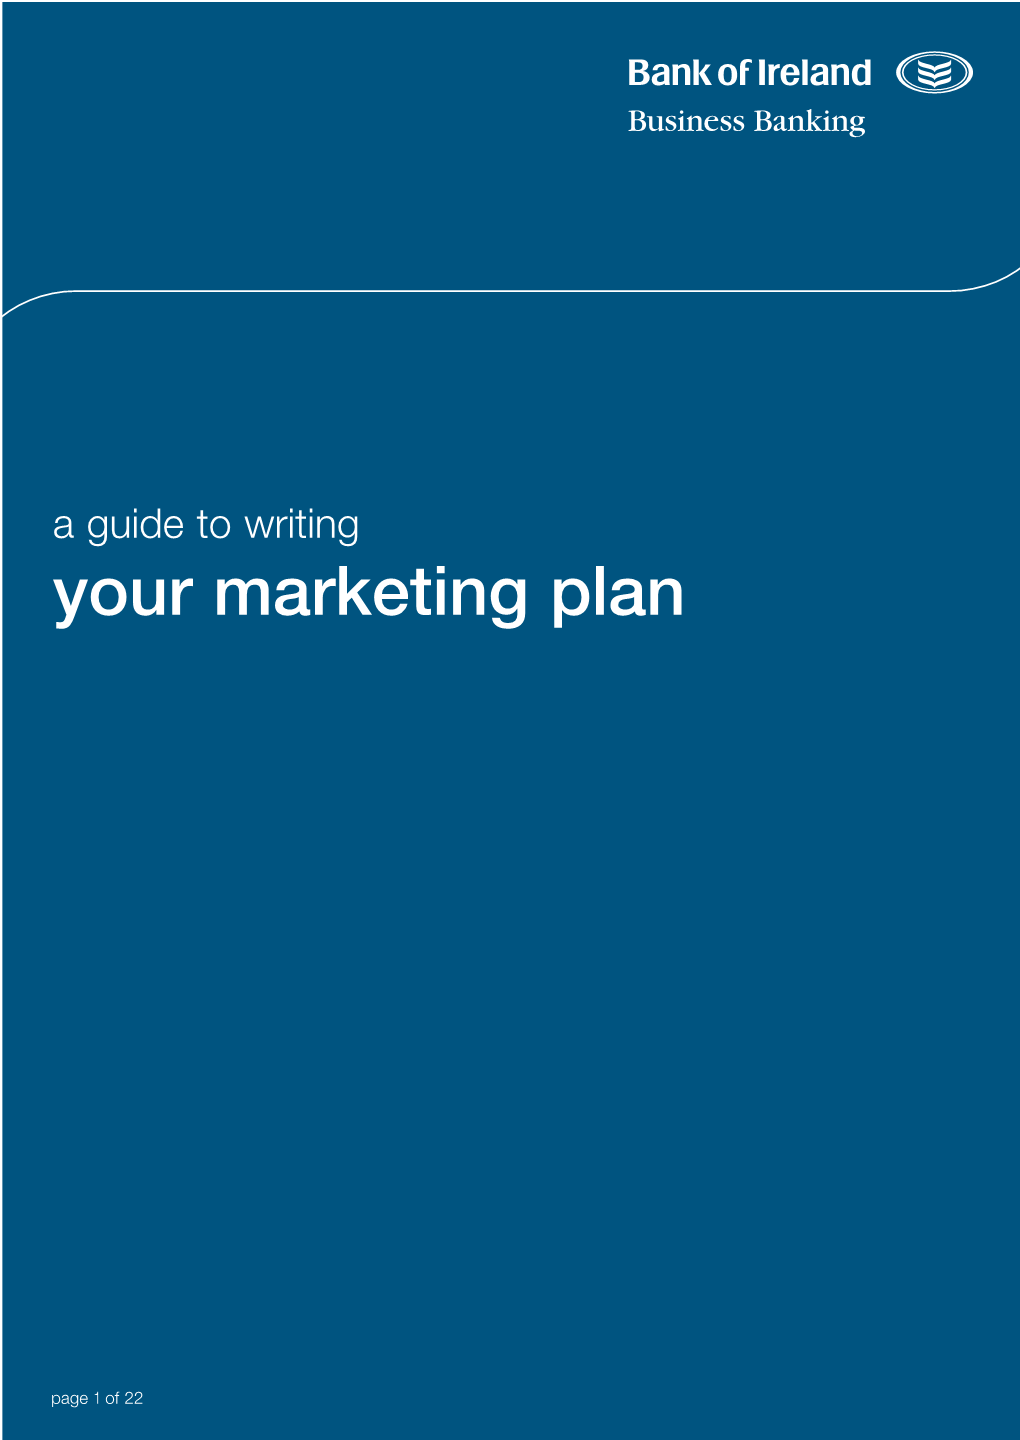 BOI Guide to Writing Your Marketing Plan